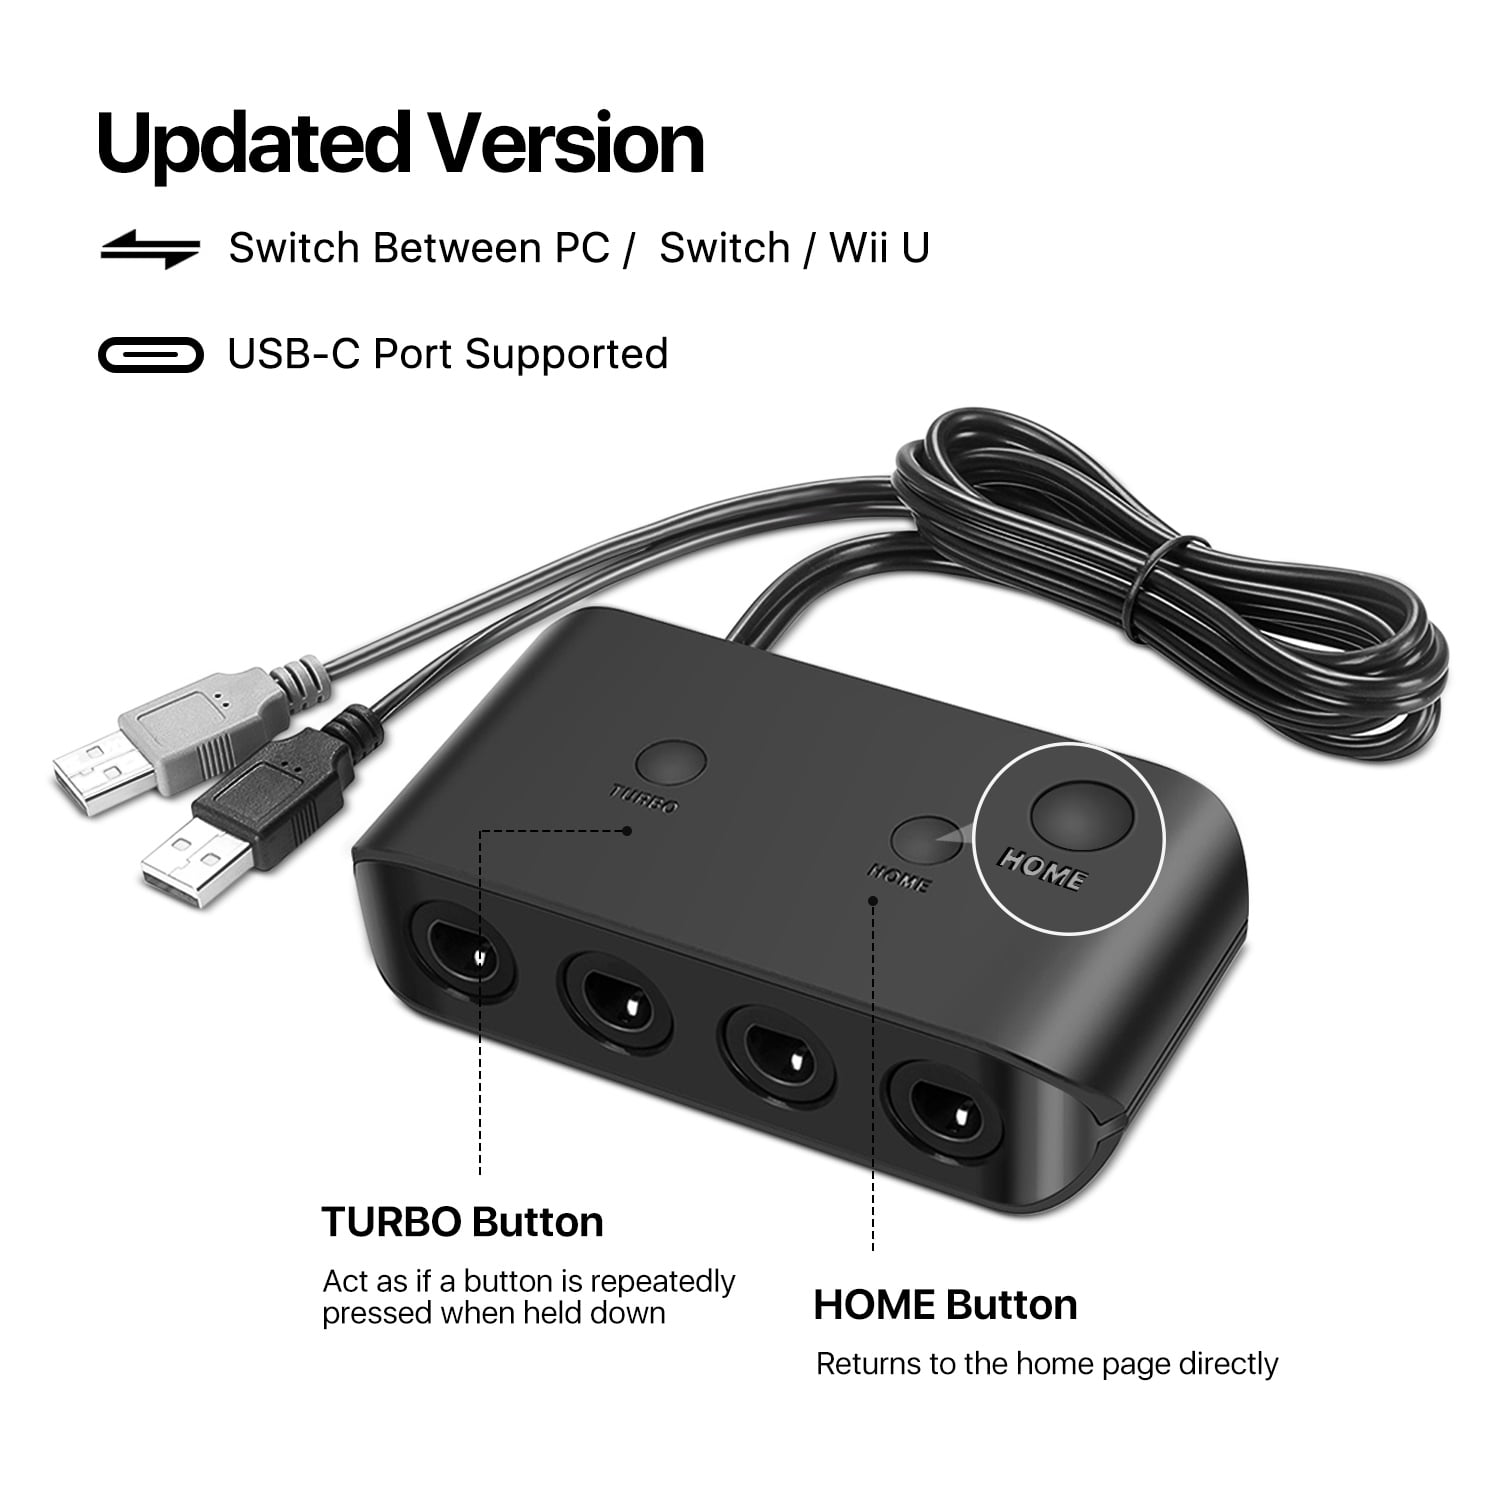 Gamecube Controller Adapter For Nintendo Wii U And Pc Usb 4 Ports Connection Tap Converter For Multi Player Games Black Nintendo Wii U Walmart Com Walmart Com